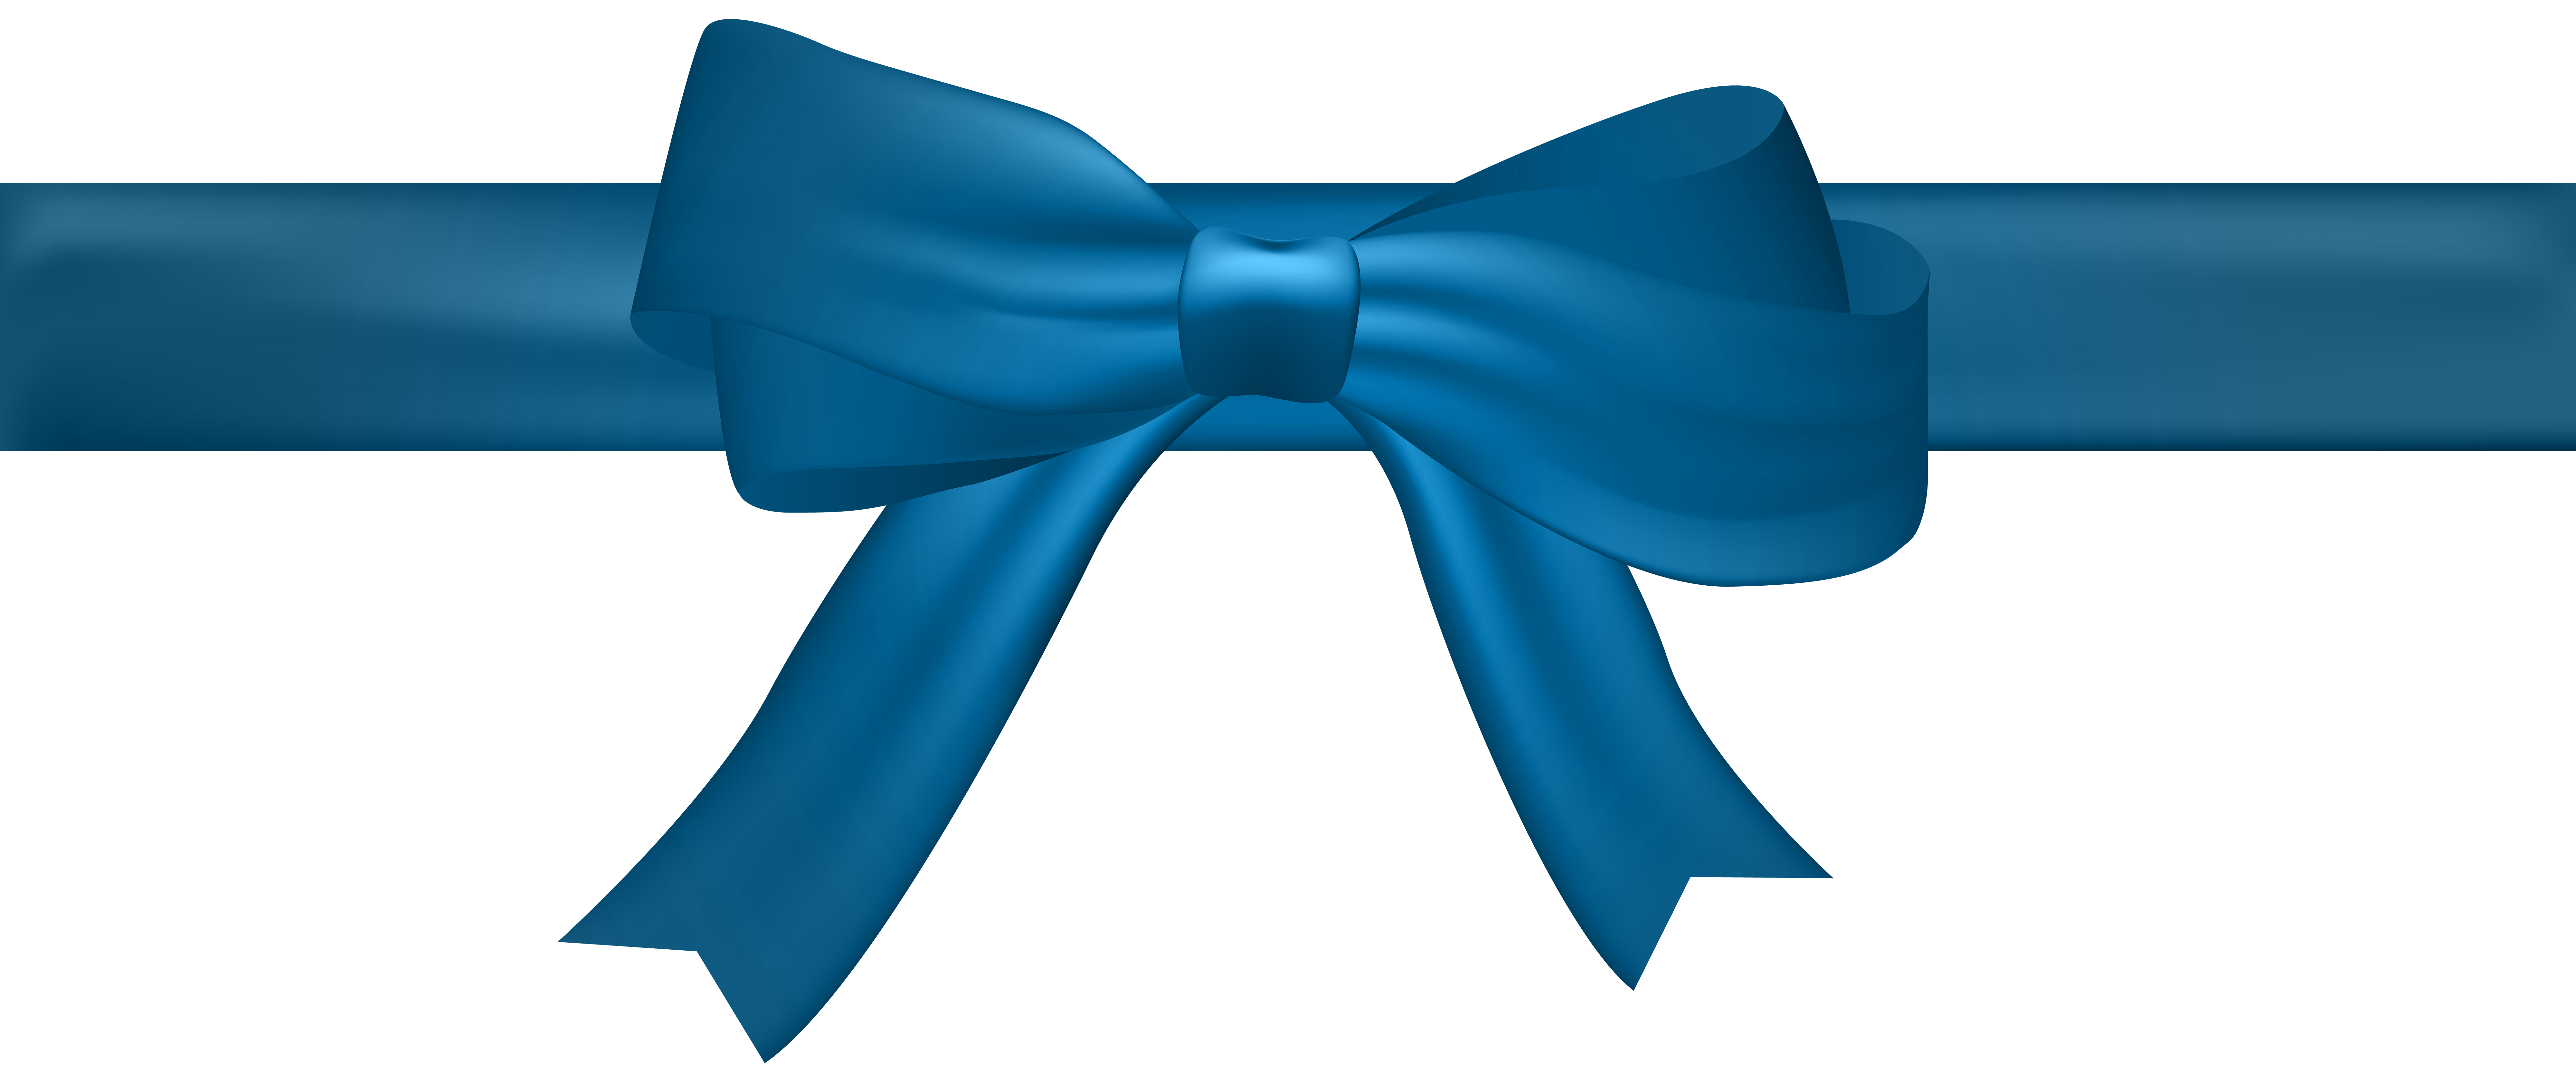 Blue Ribbon Clip art - ribbon png download - 8000*3337 - Free ...